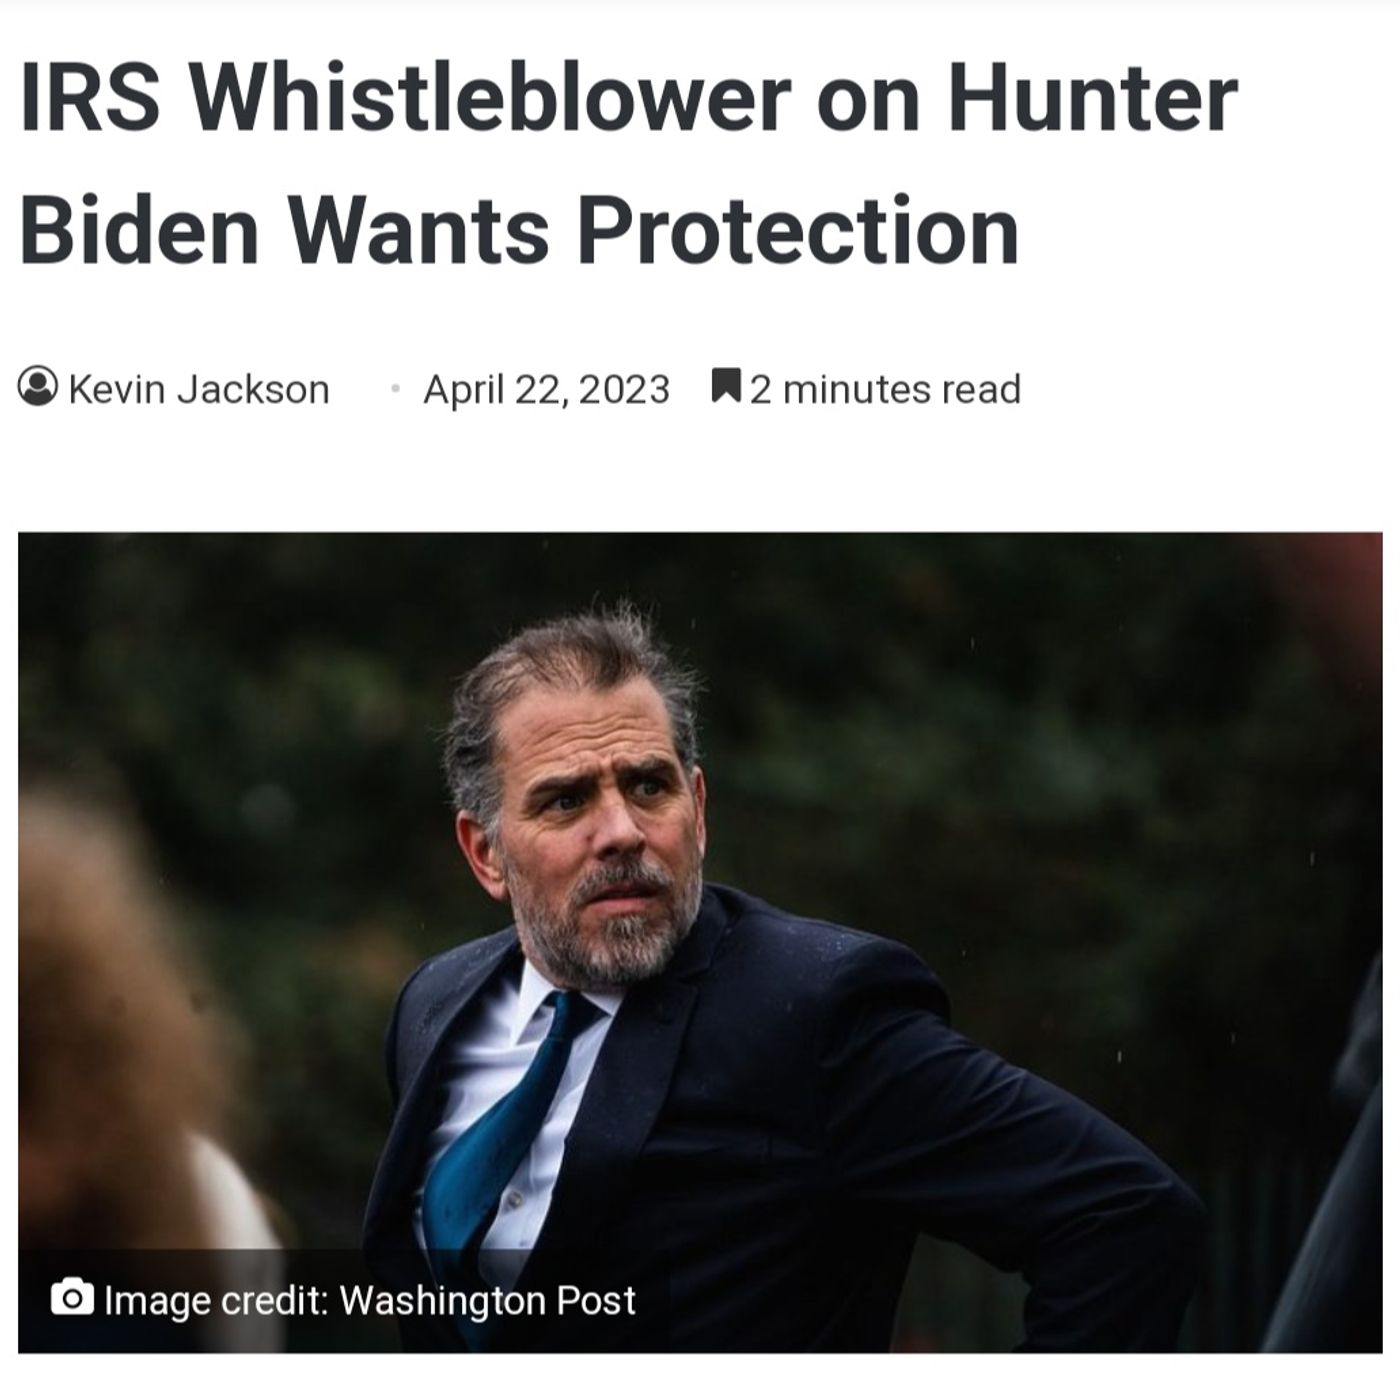 IRS Whistleblower on Hunter Biden Wants Protection